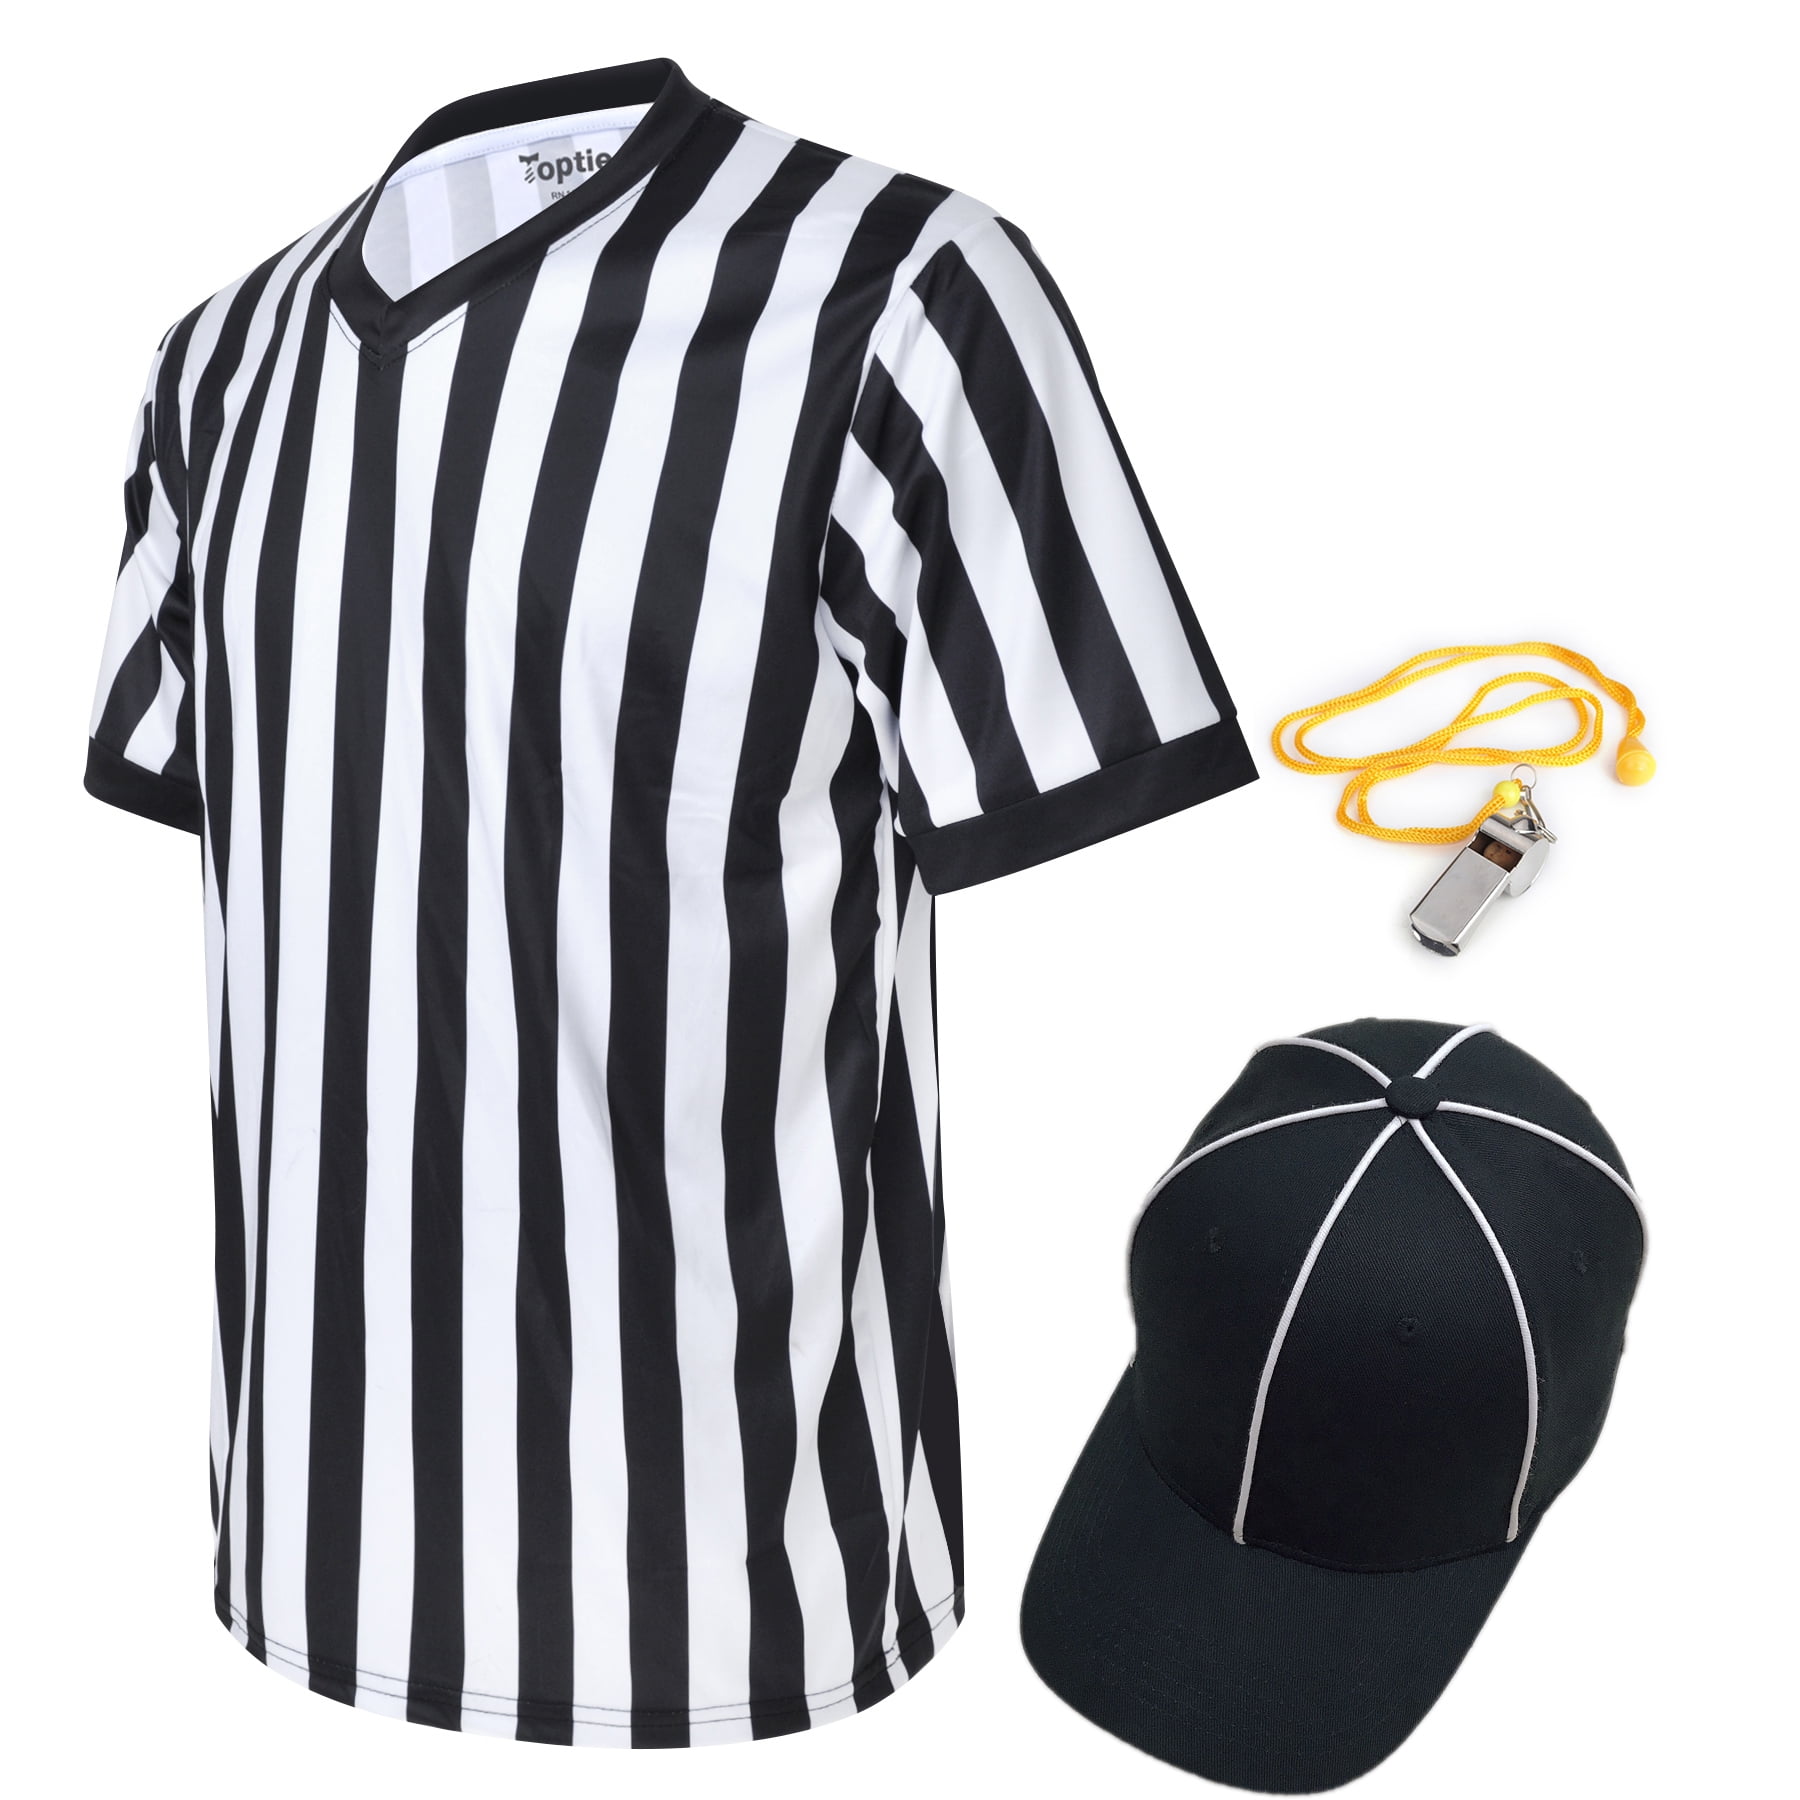 TOPTIE Mens Official V Neck Black White Stripe Referee Jersey Shirt 